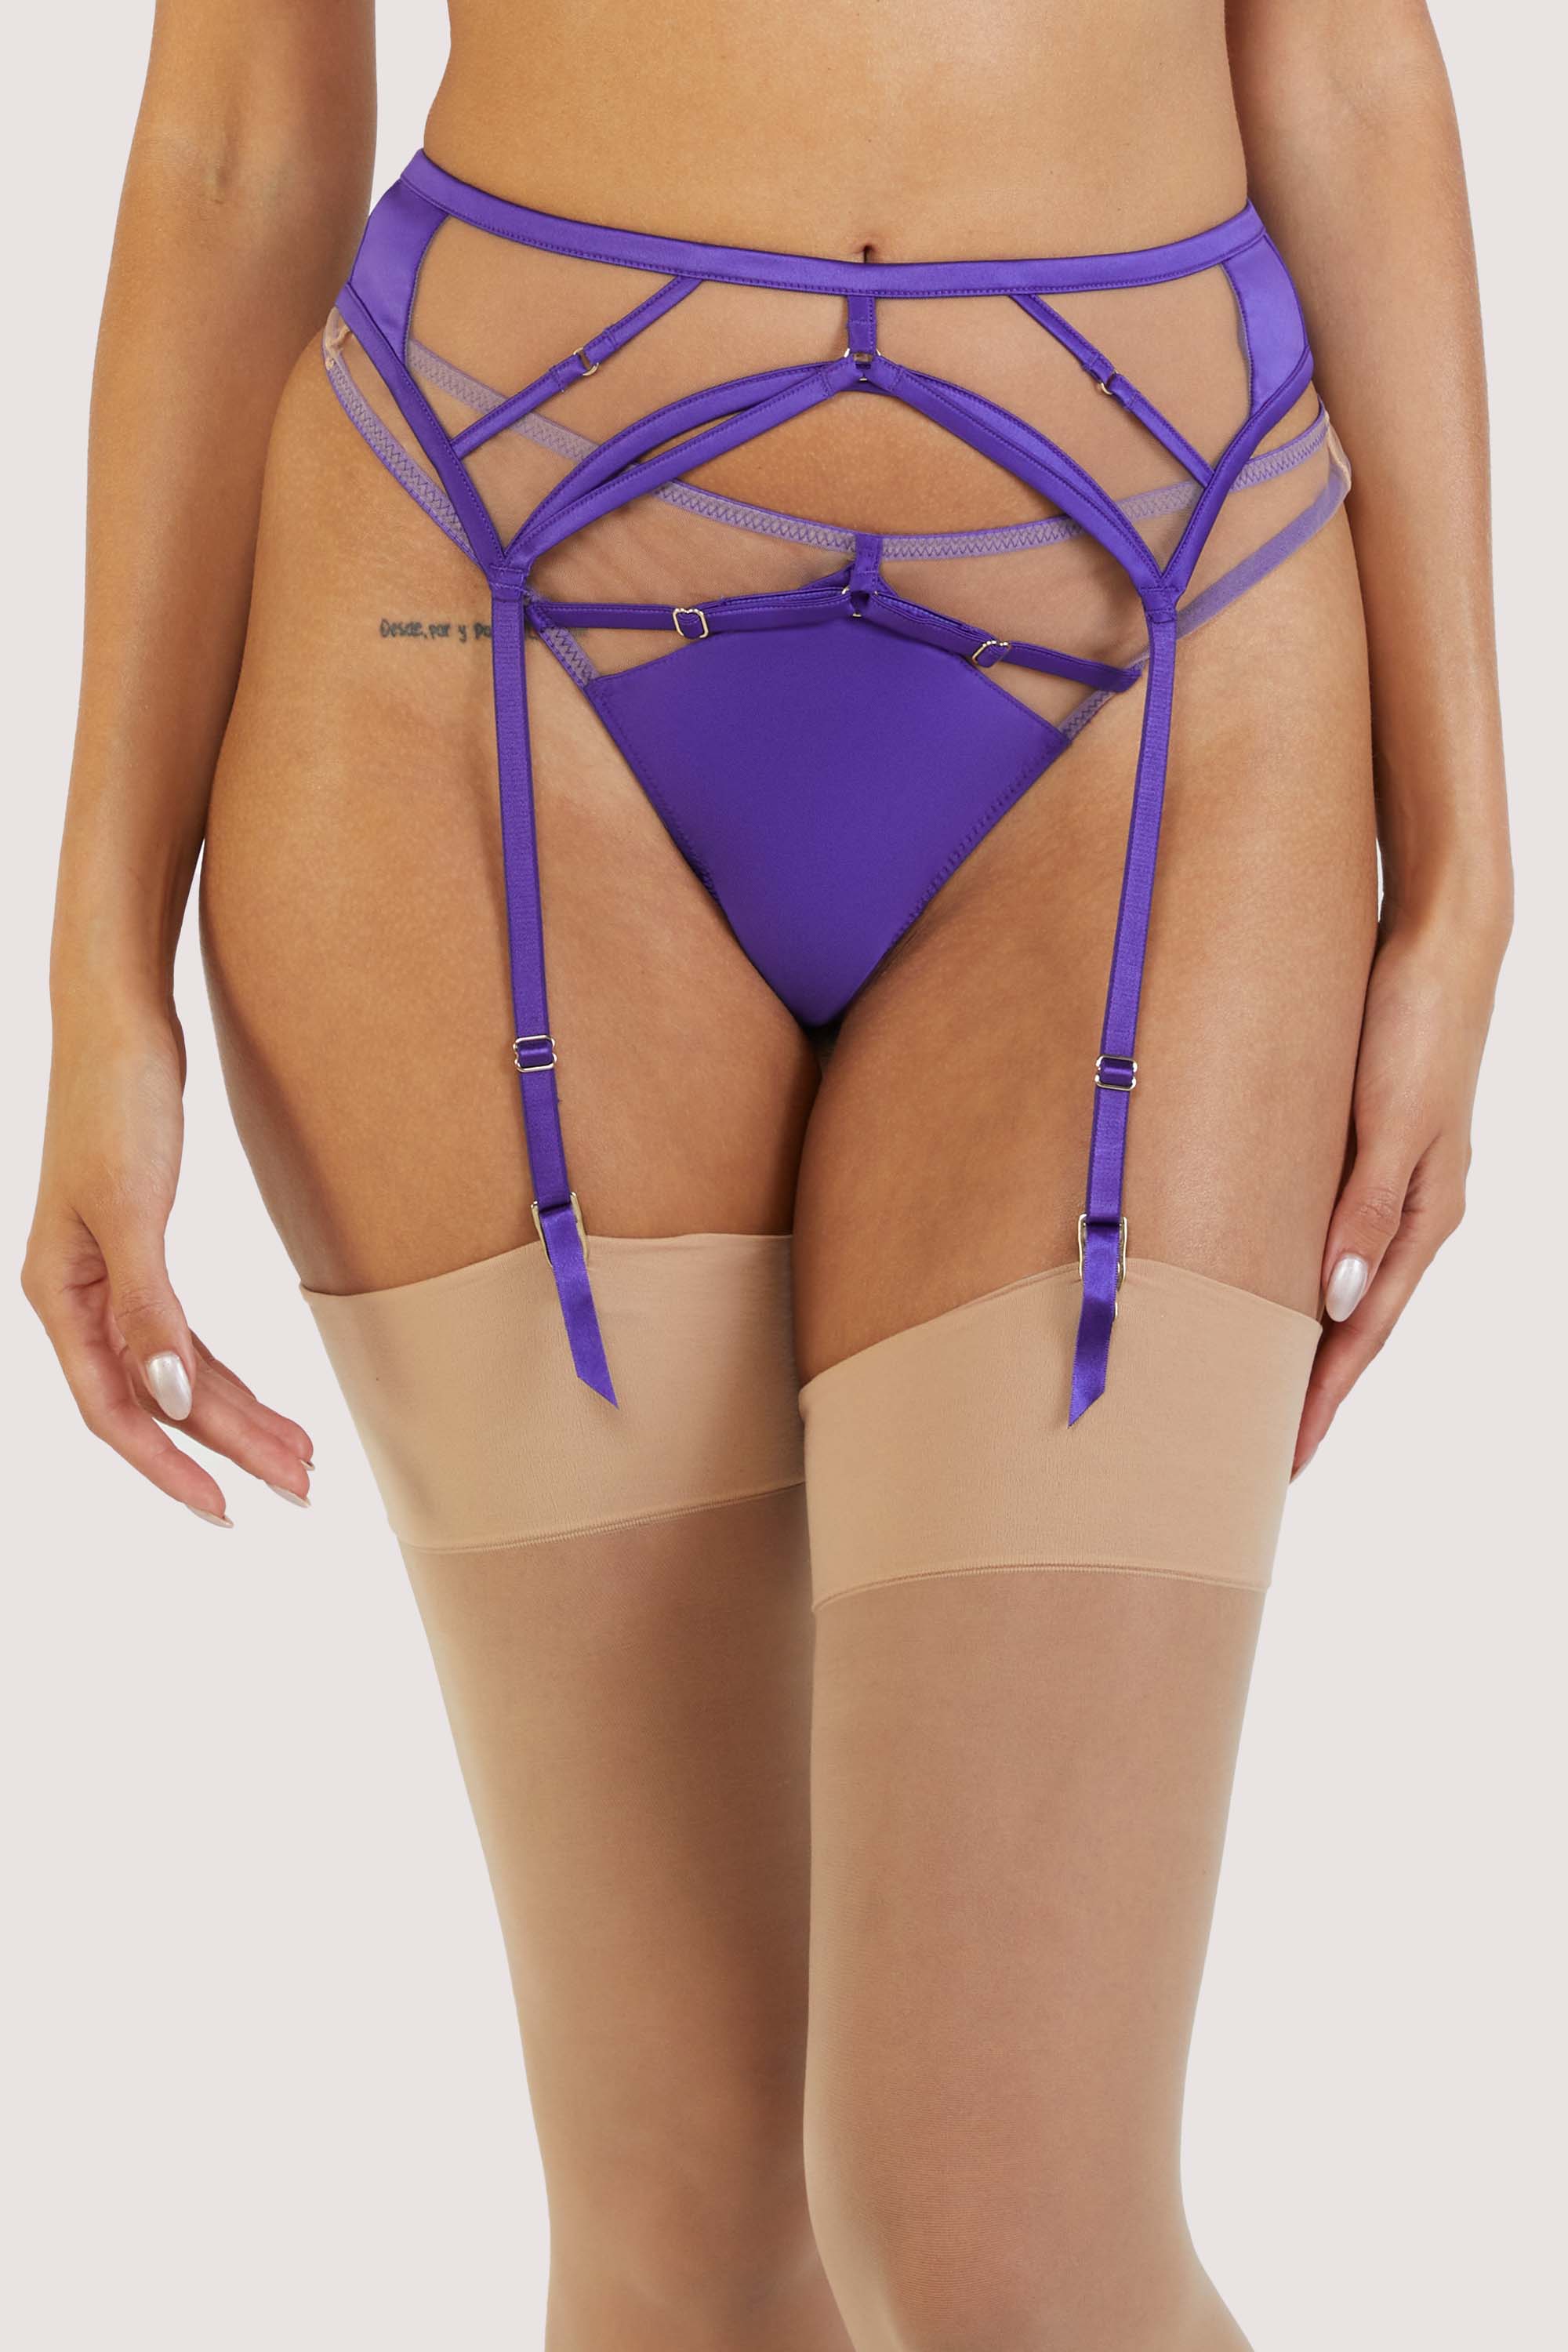 Ramona Purple Strap Detail Illusion Mesh Suspender 24